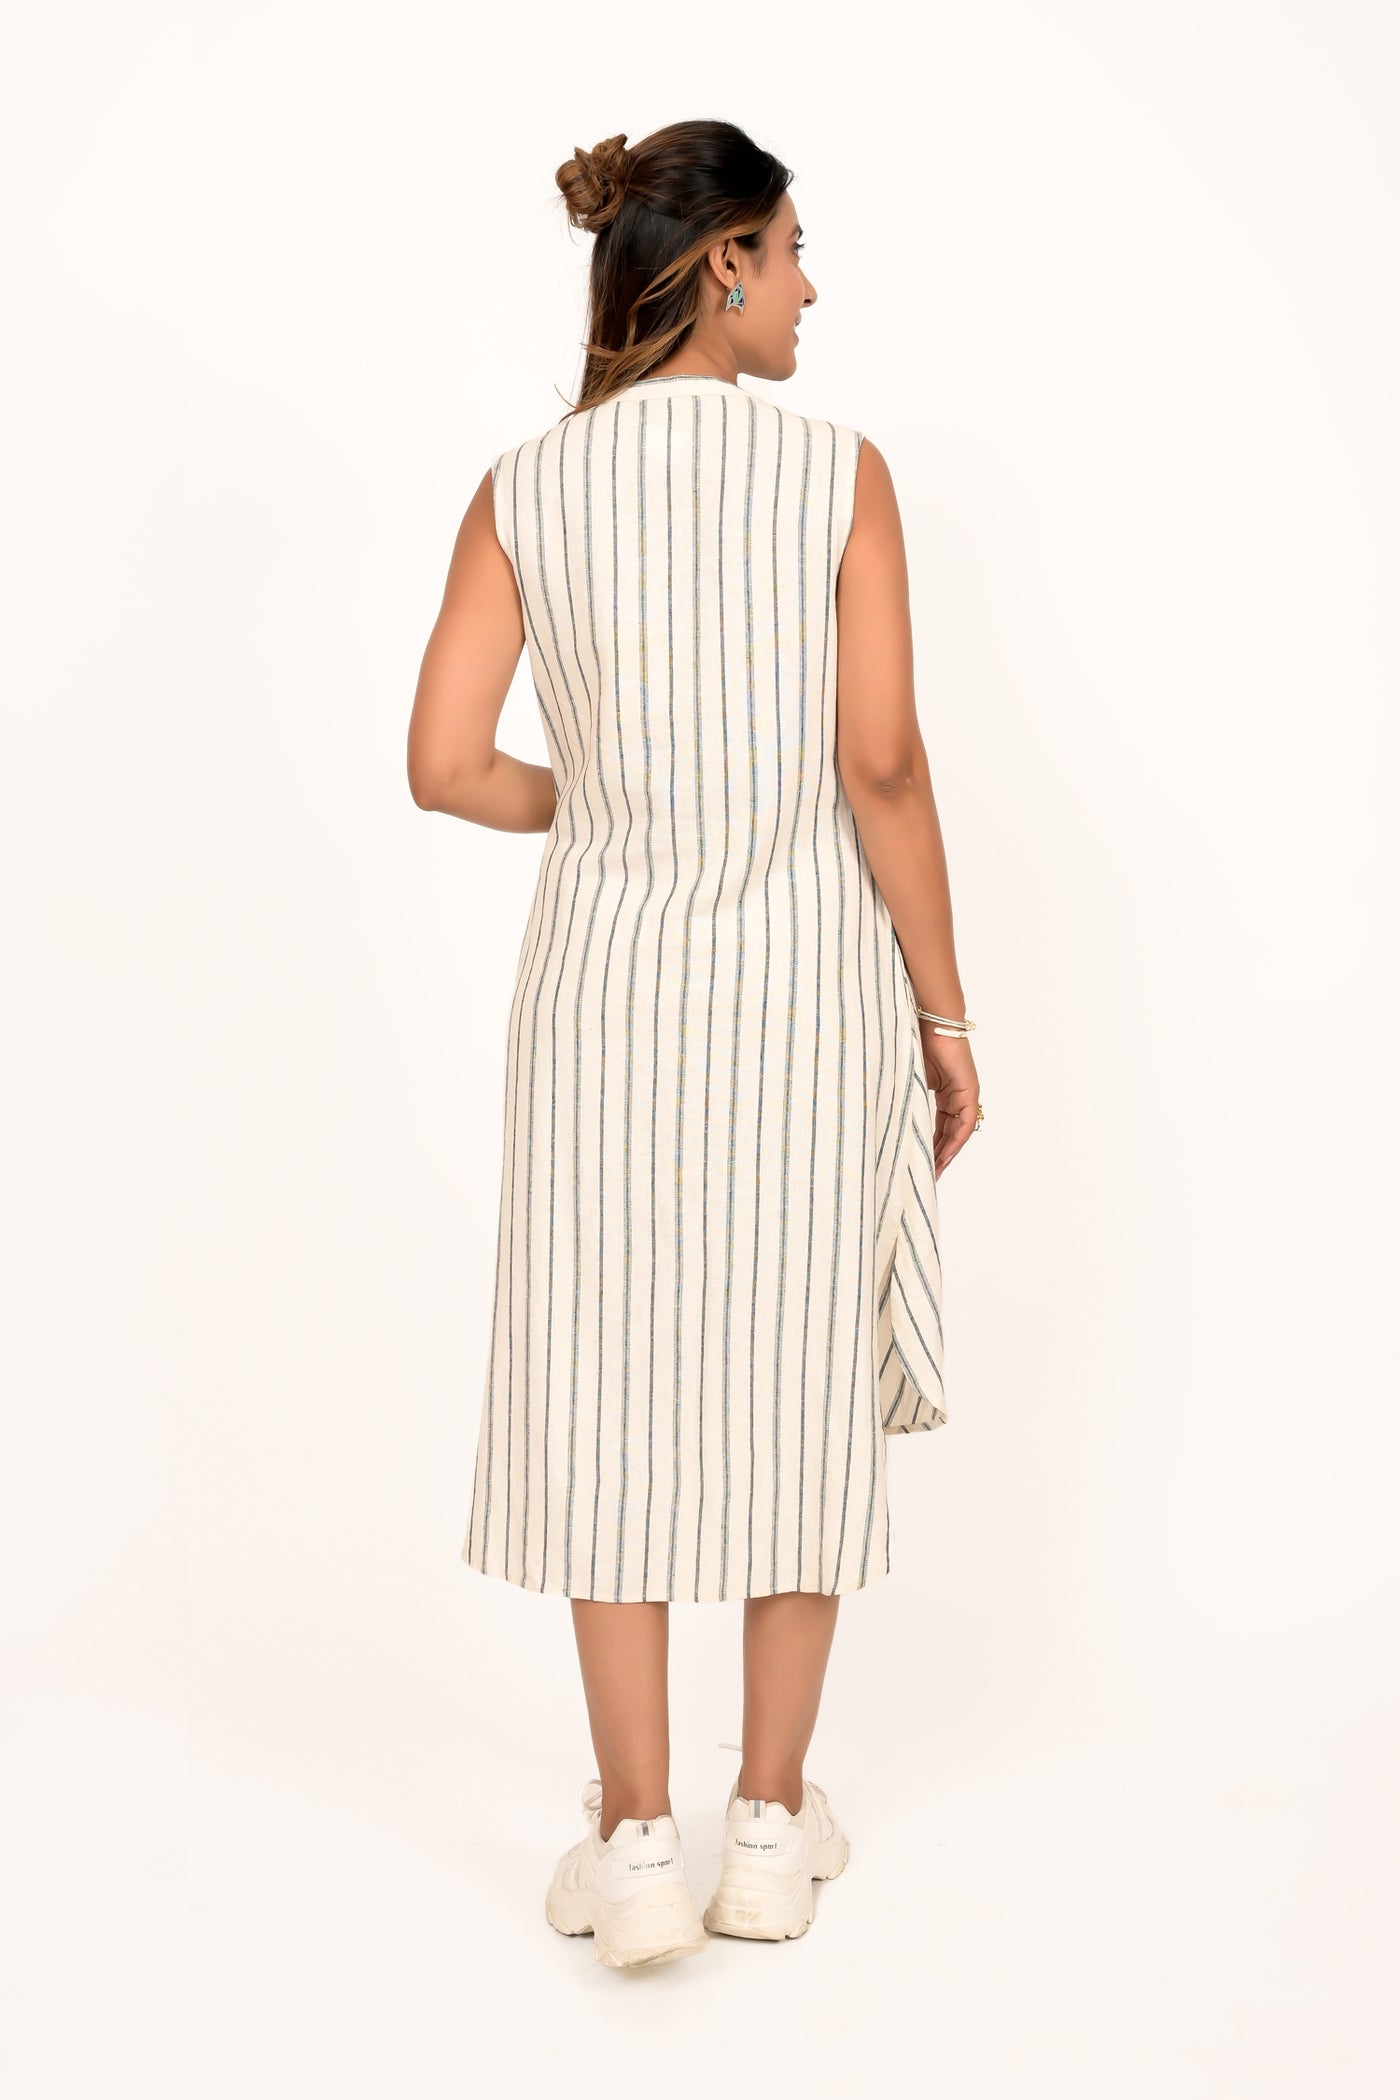 Off White Striped Linen Dress